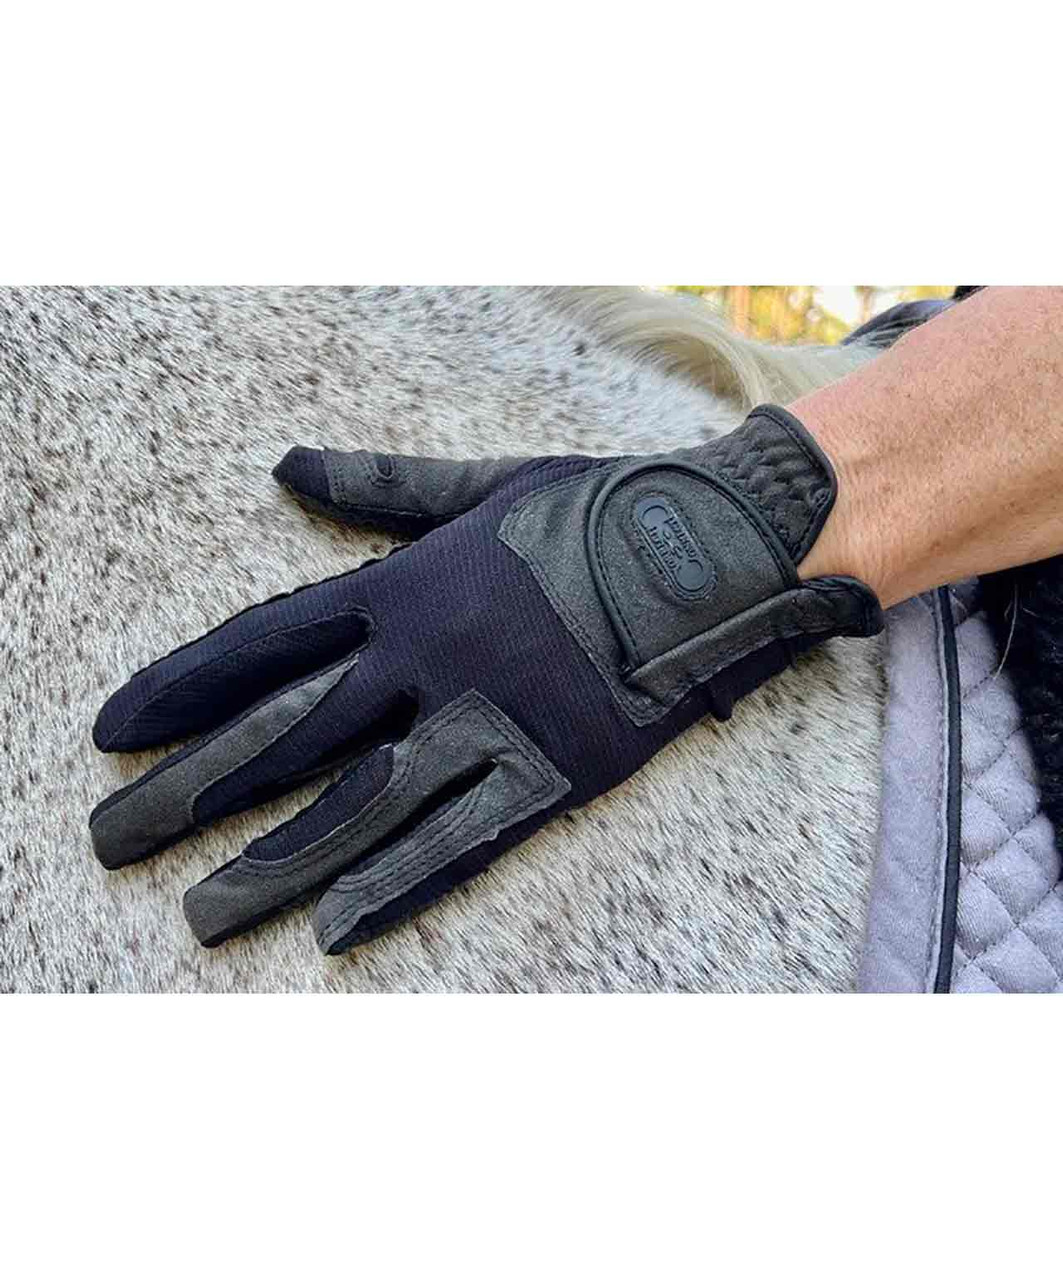 Correct Connect Coppertech Pro Silicon Grip Glove Black S